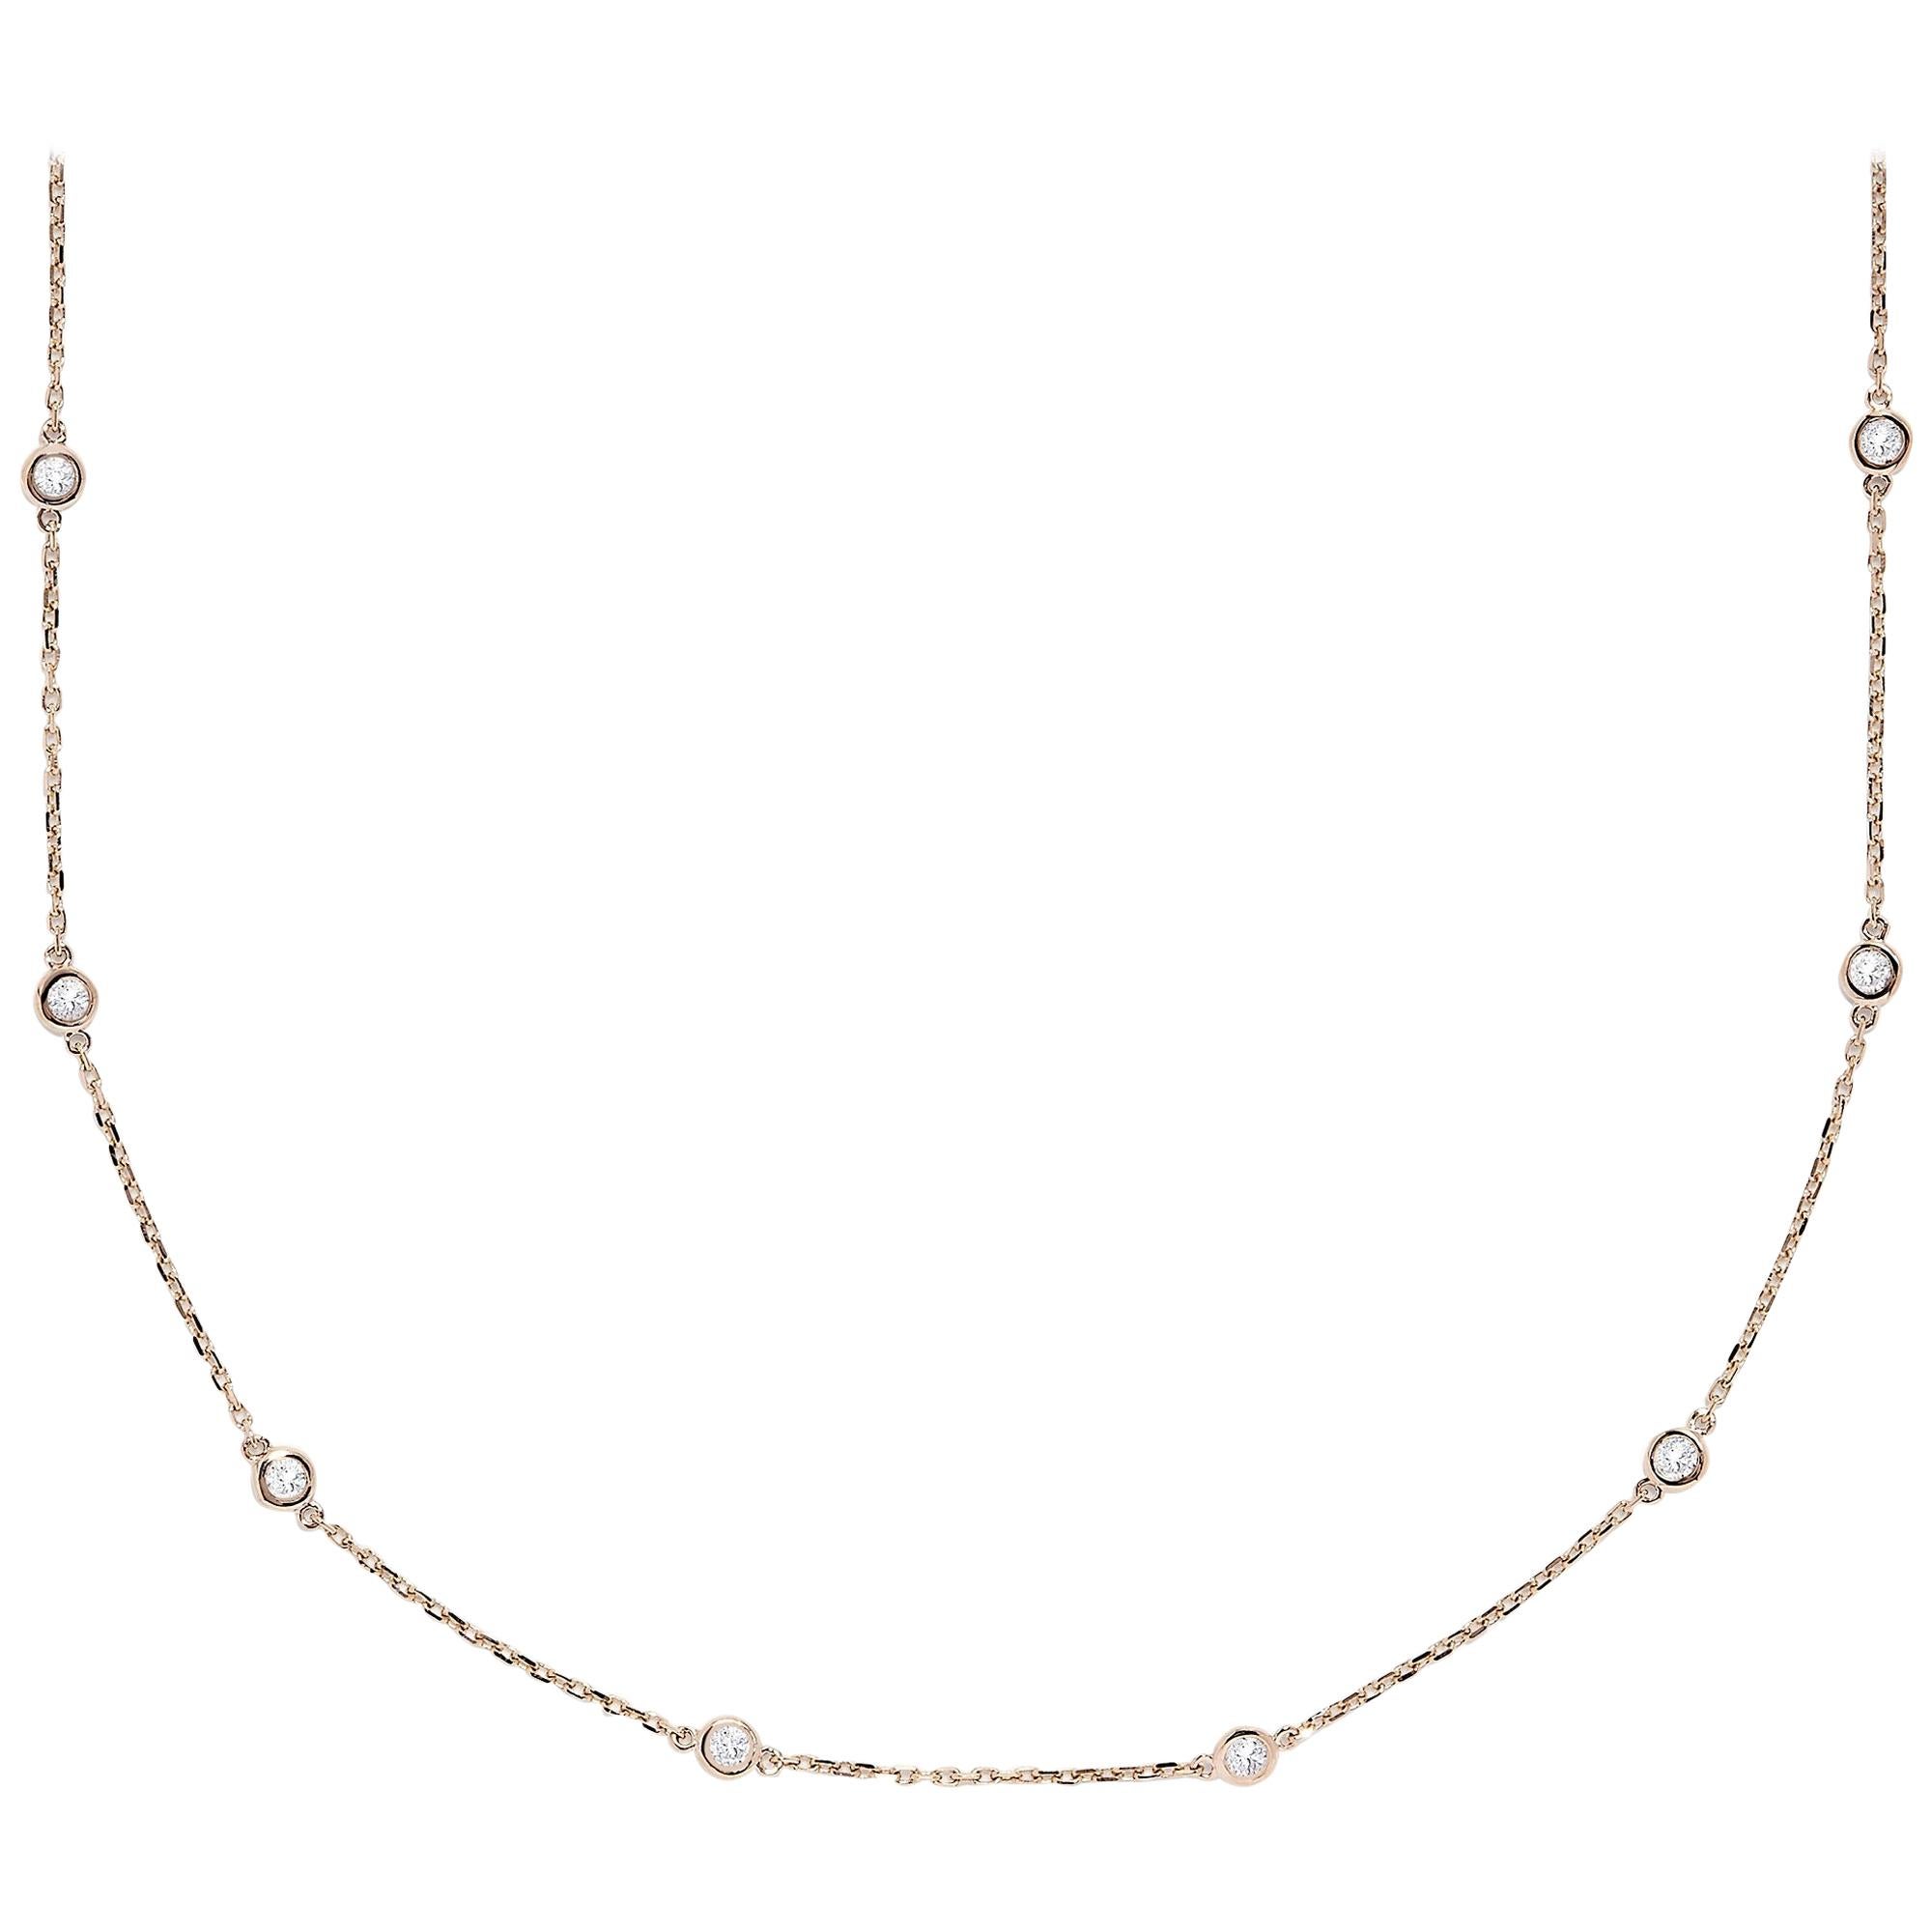 Designer Effy's 1.88 Carat Diamond by Yard Necklace 14 Karat Rose Gold Chain